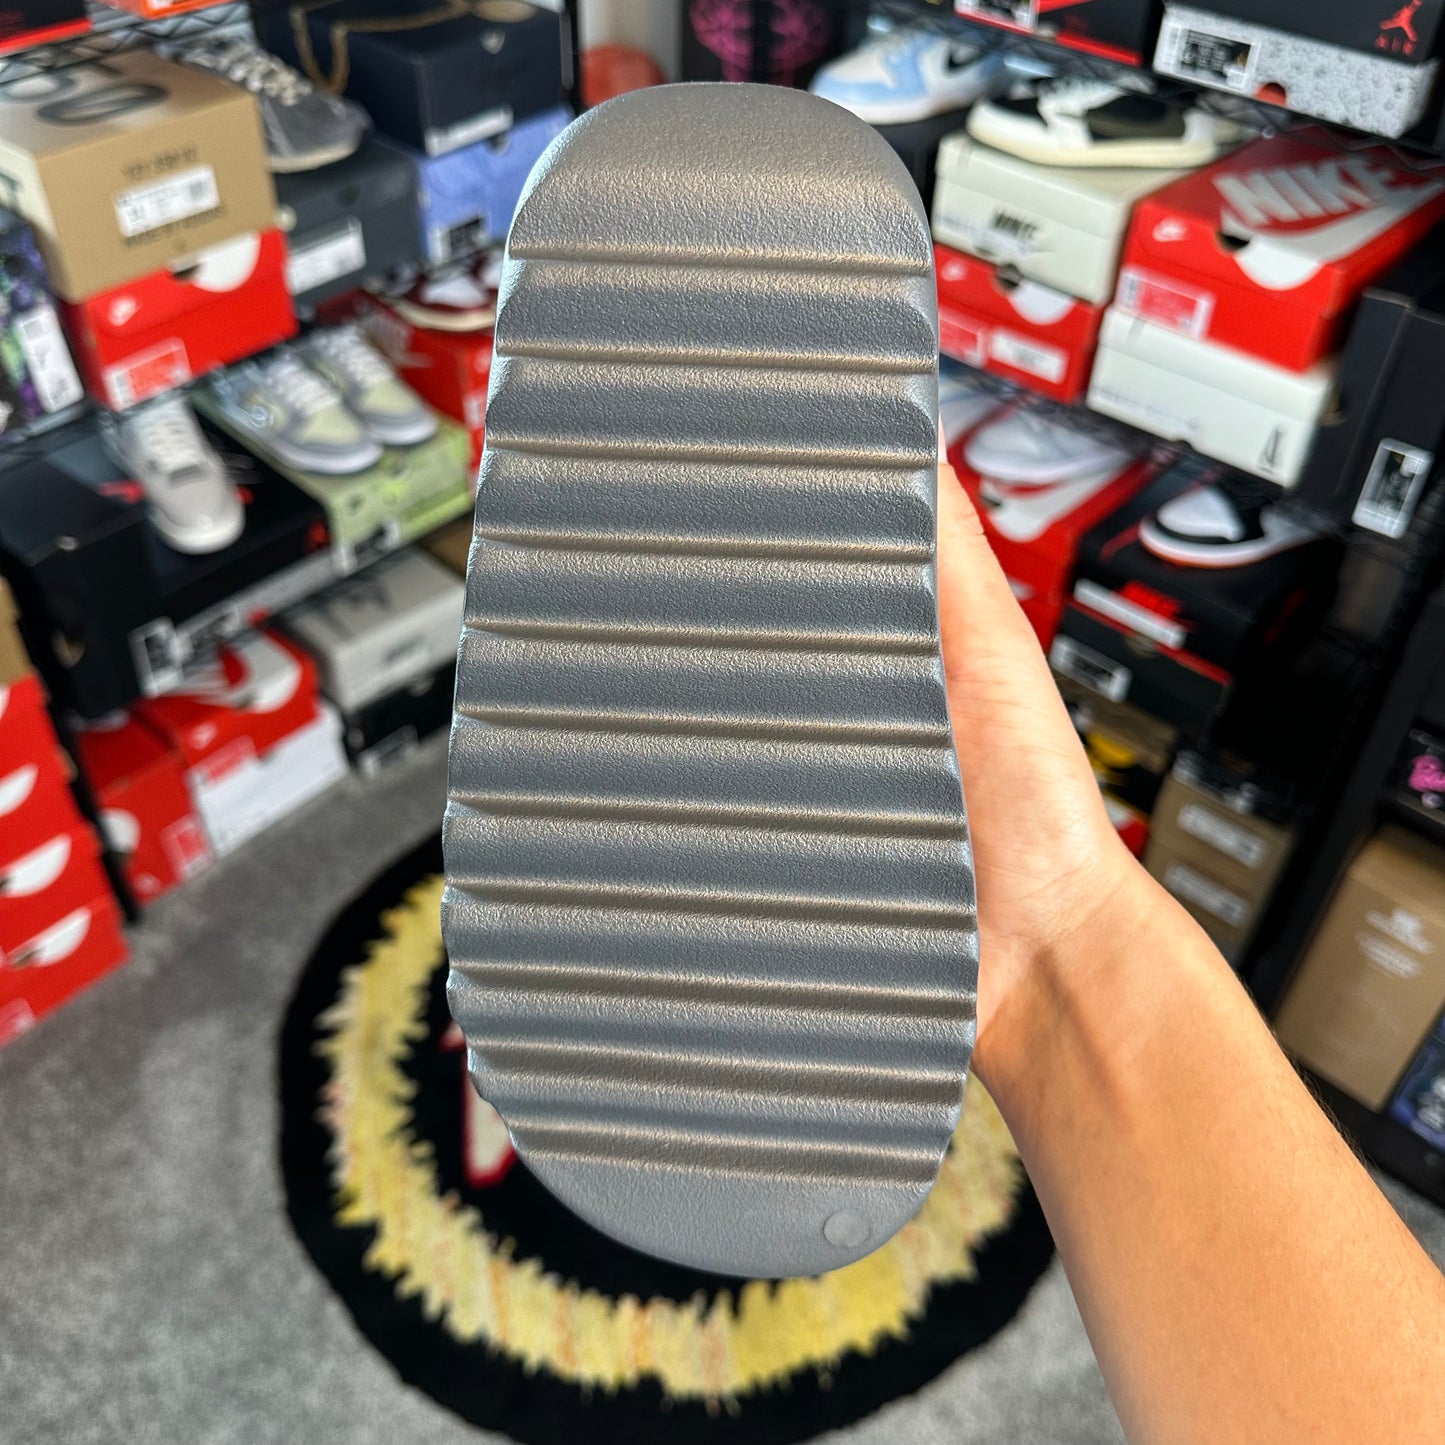 Adidas Yeezy Slide 'Granite'